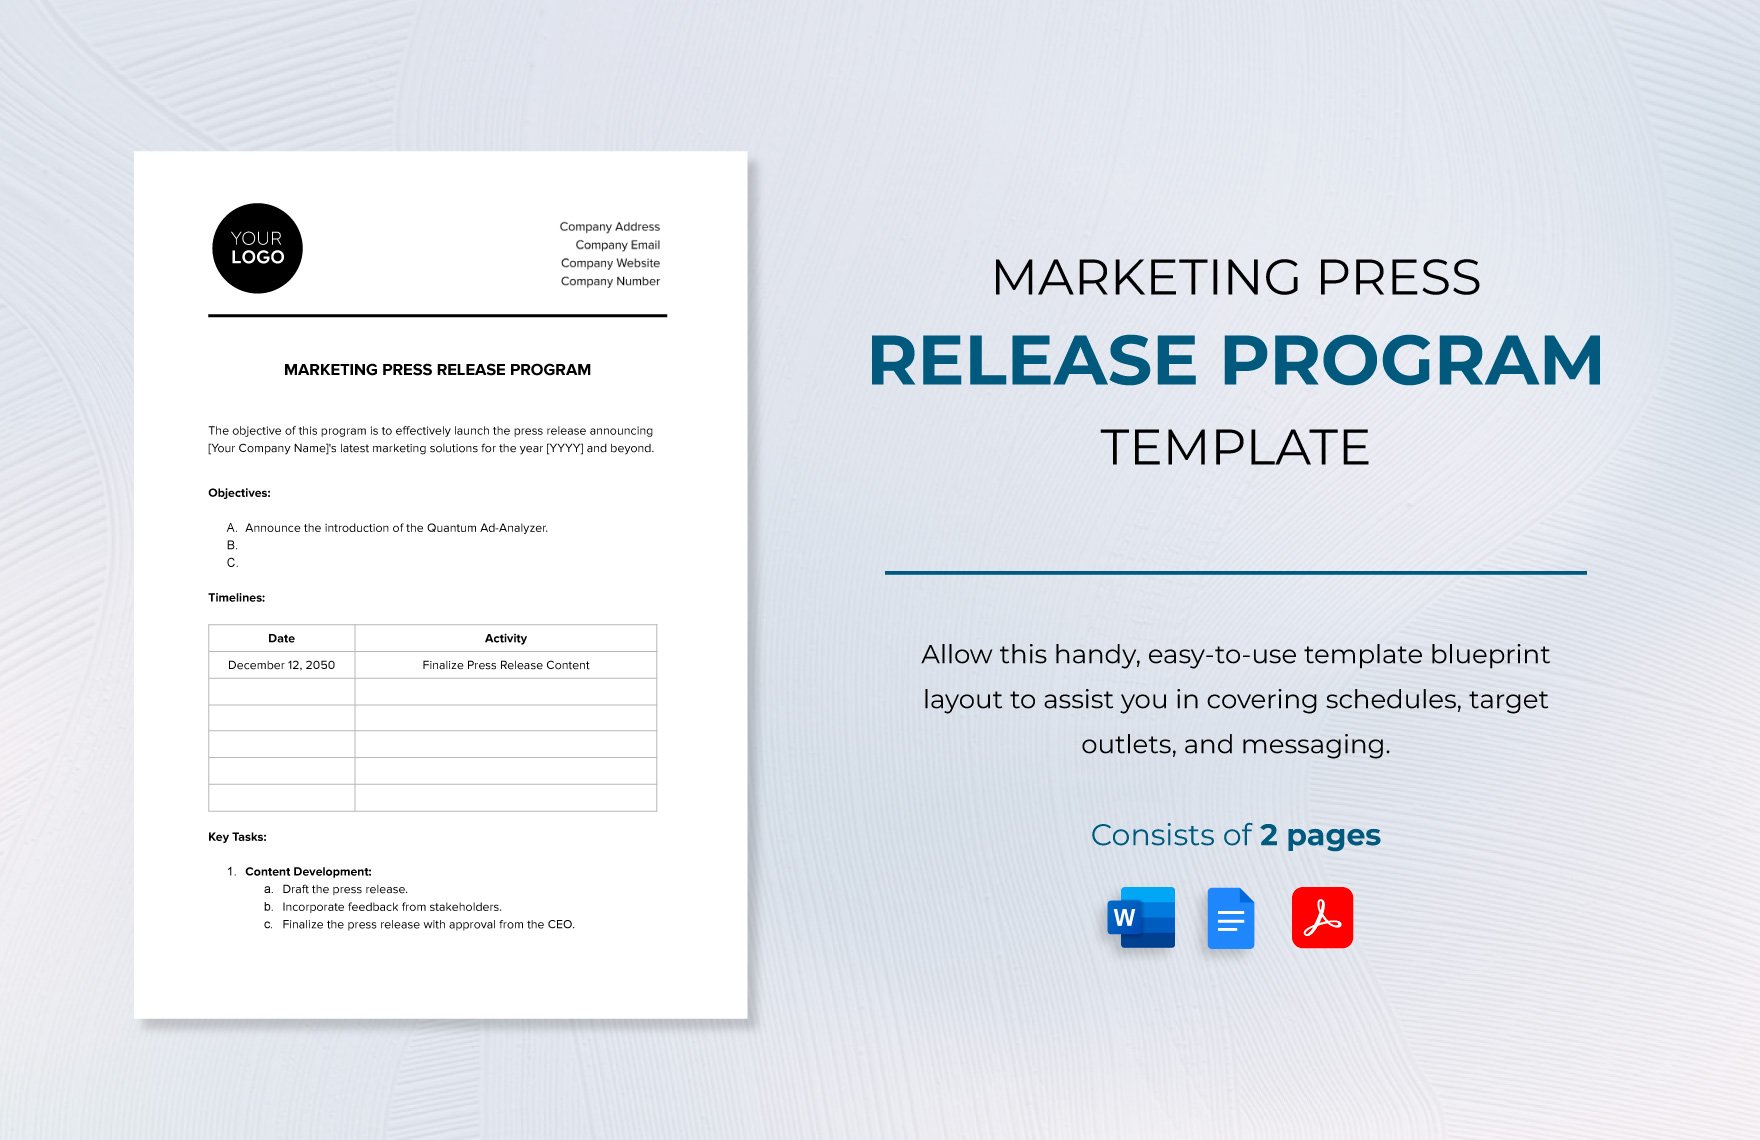 Marketing Press Release Program Template